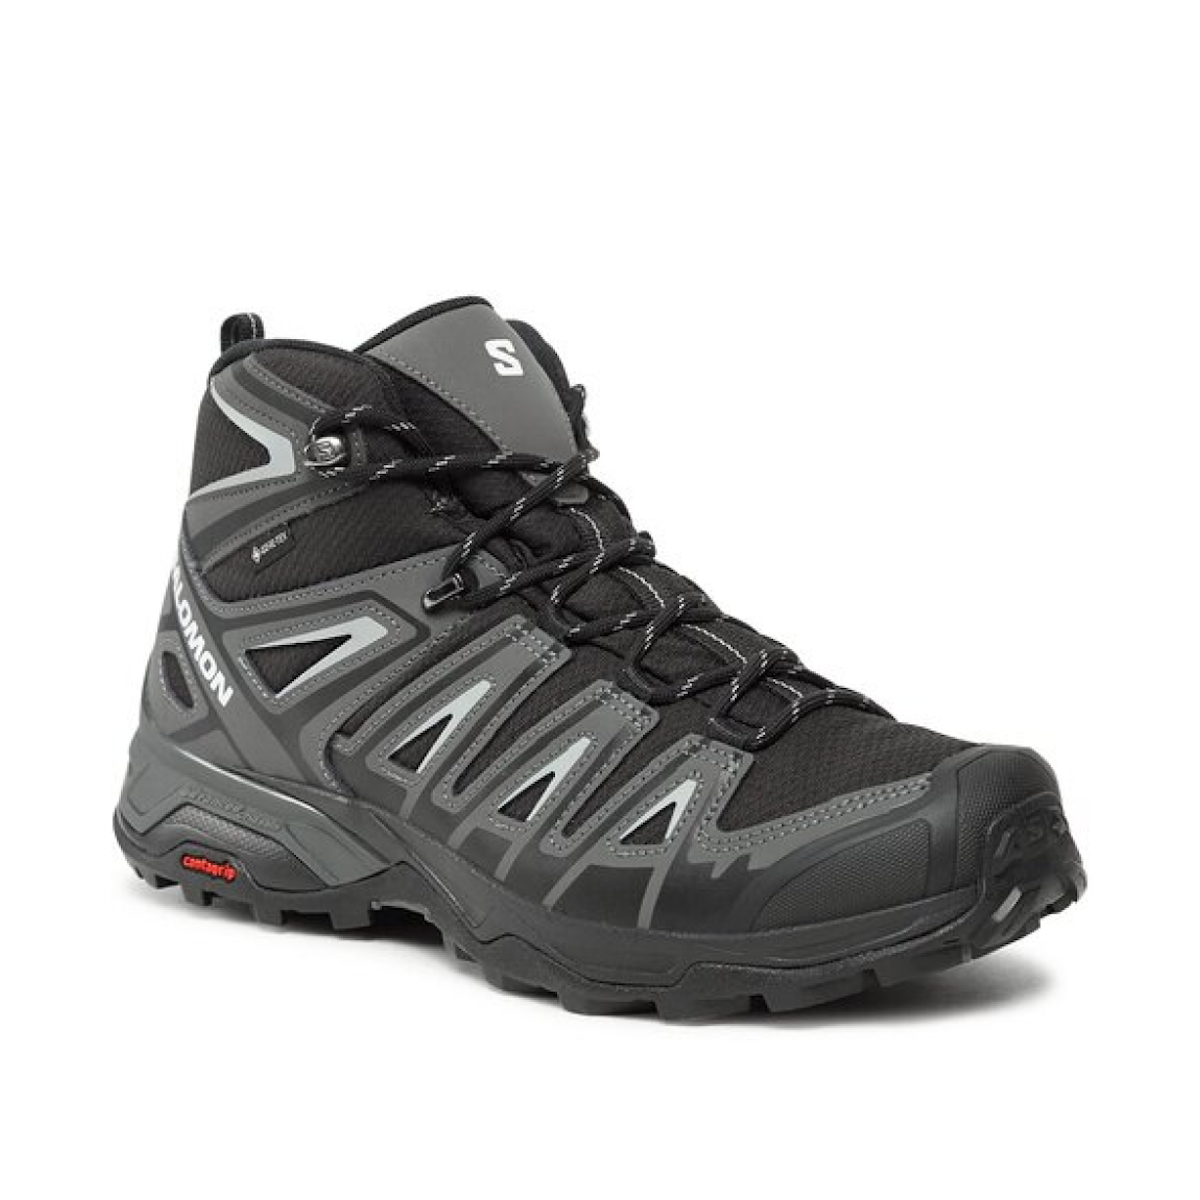 SALOMON X ULTRA PIONEER MID GTX hiking footwear - black/grey